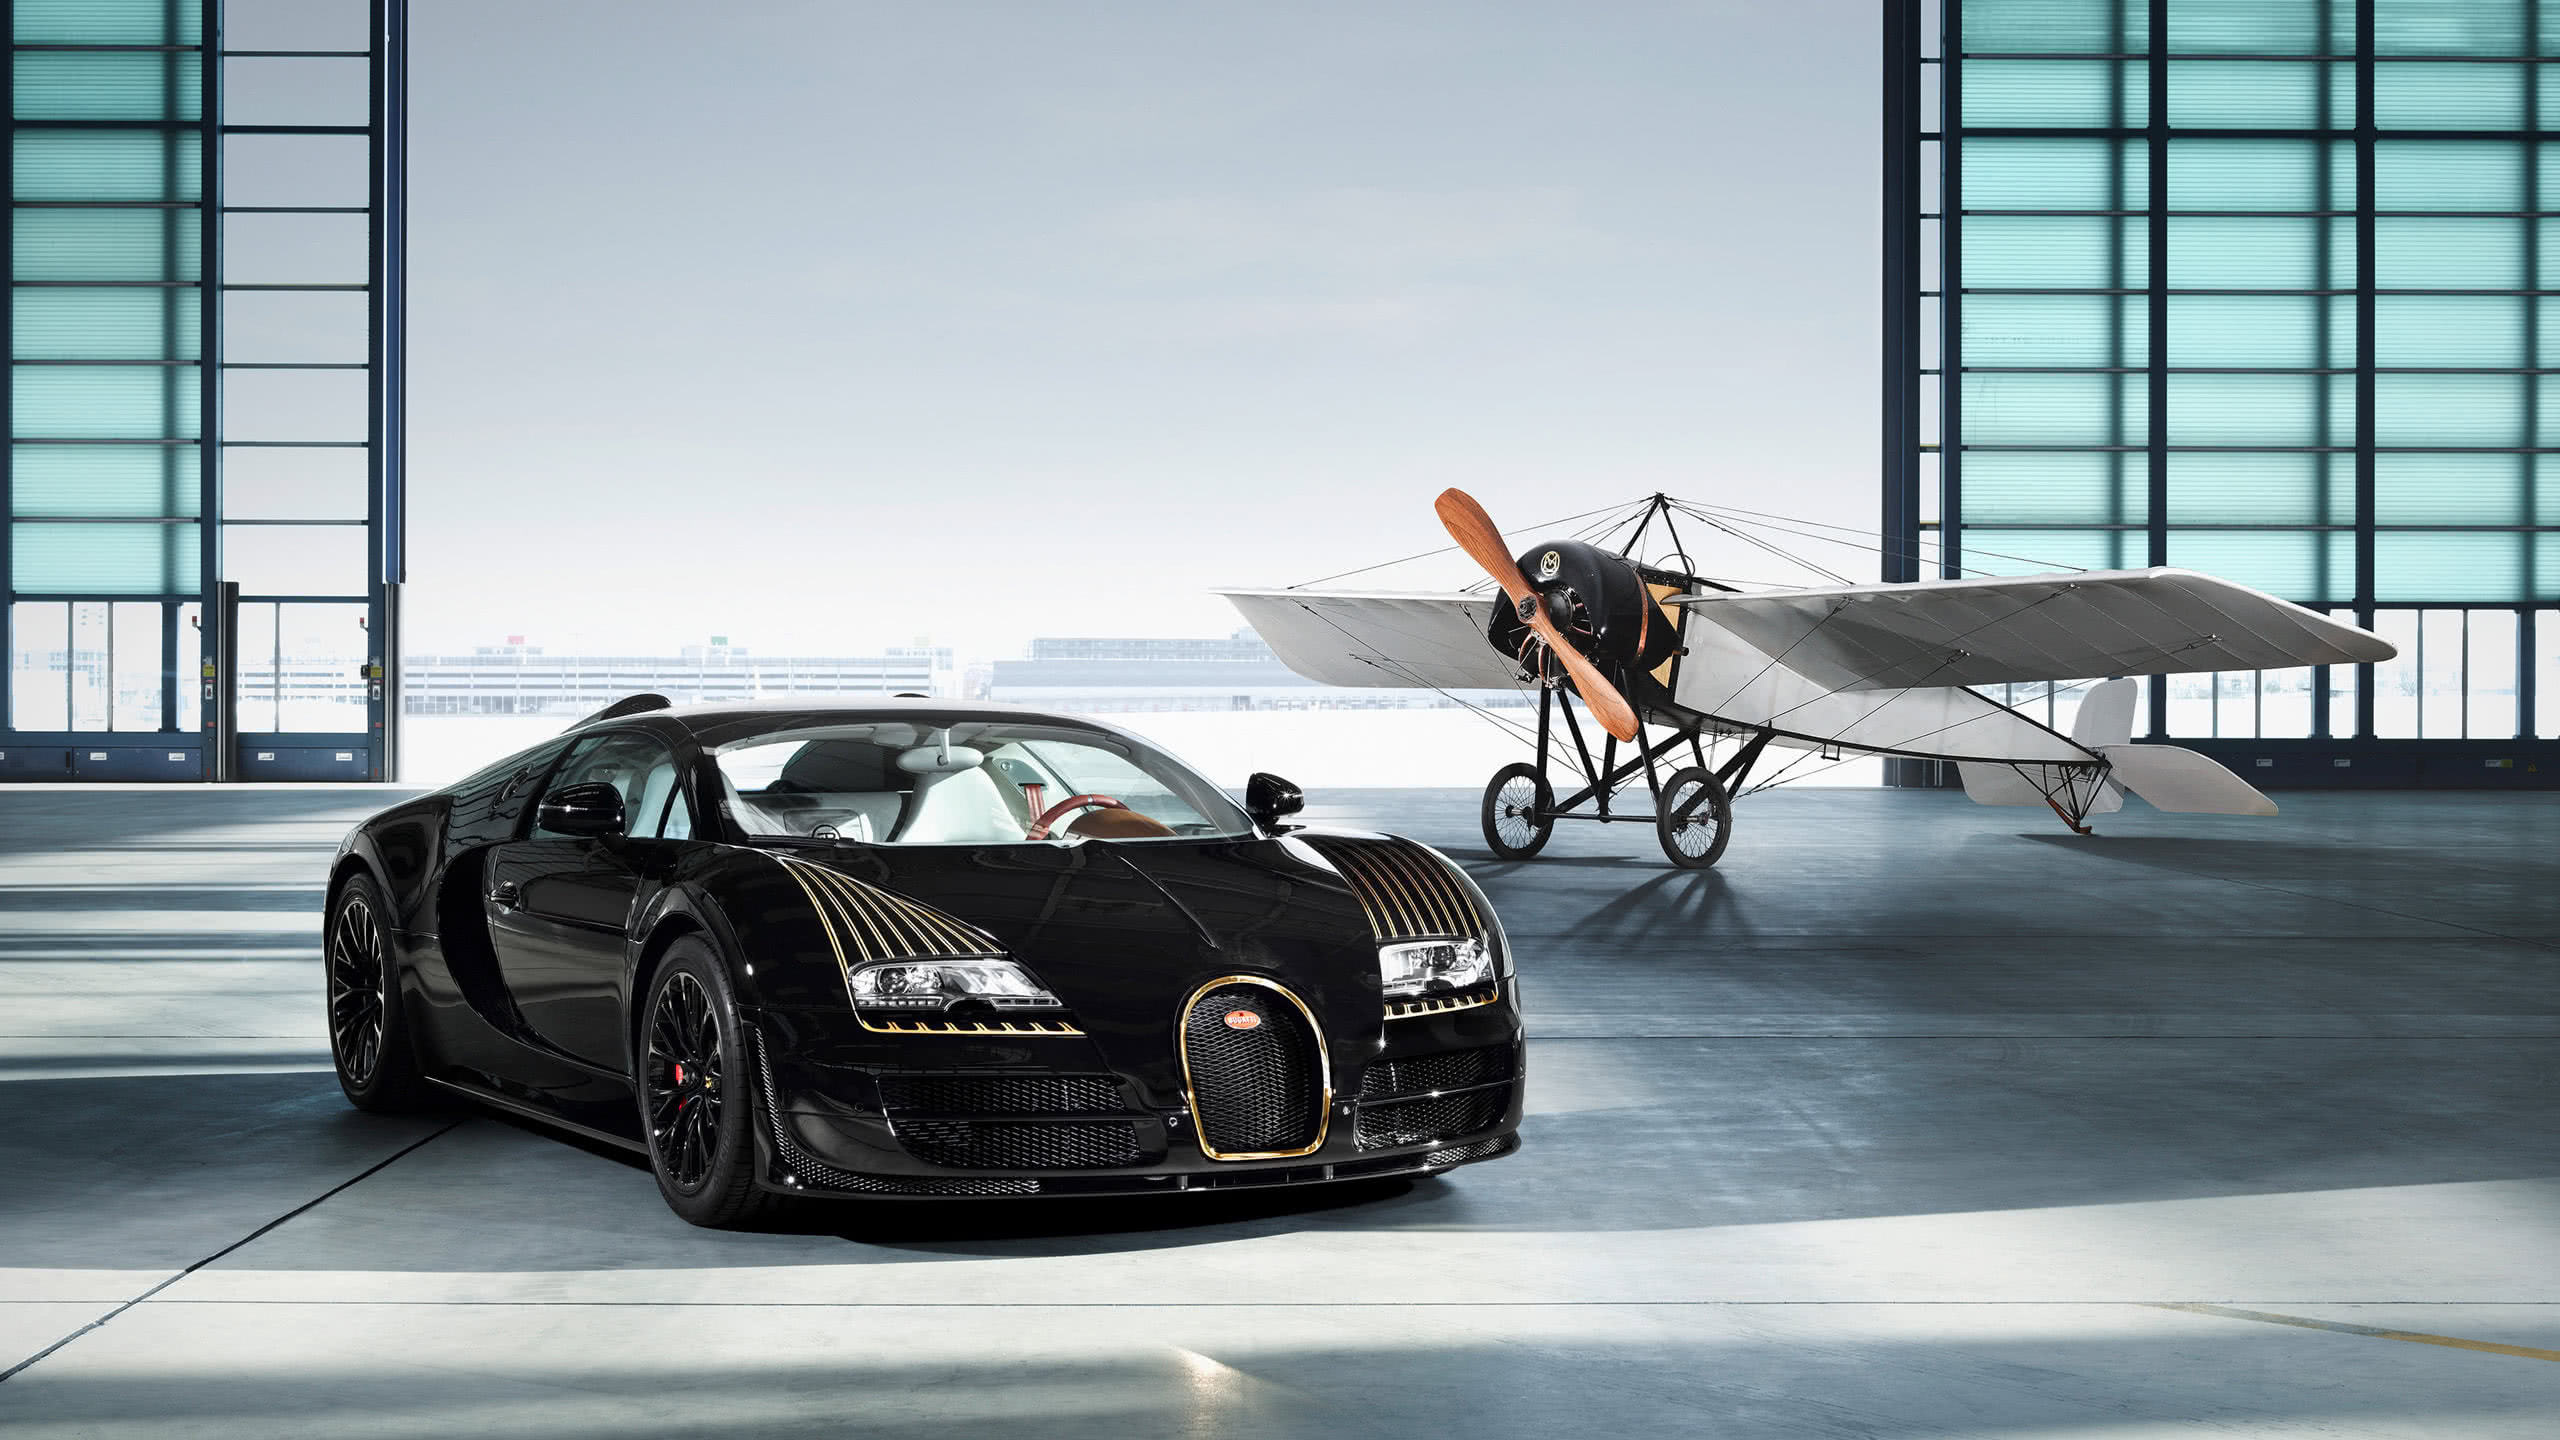 Bugatti Veyron, Vitesse Black Bess edition, High-quality wallpaper, WQHD resolution, 2560x1440 HD Desktop